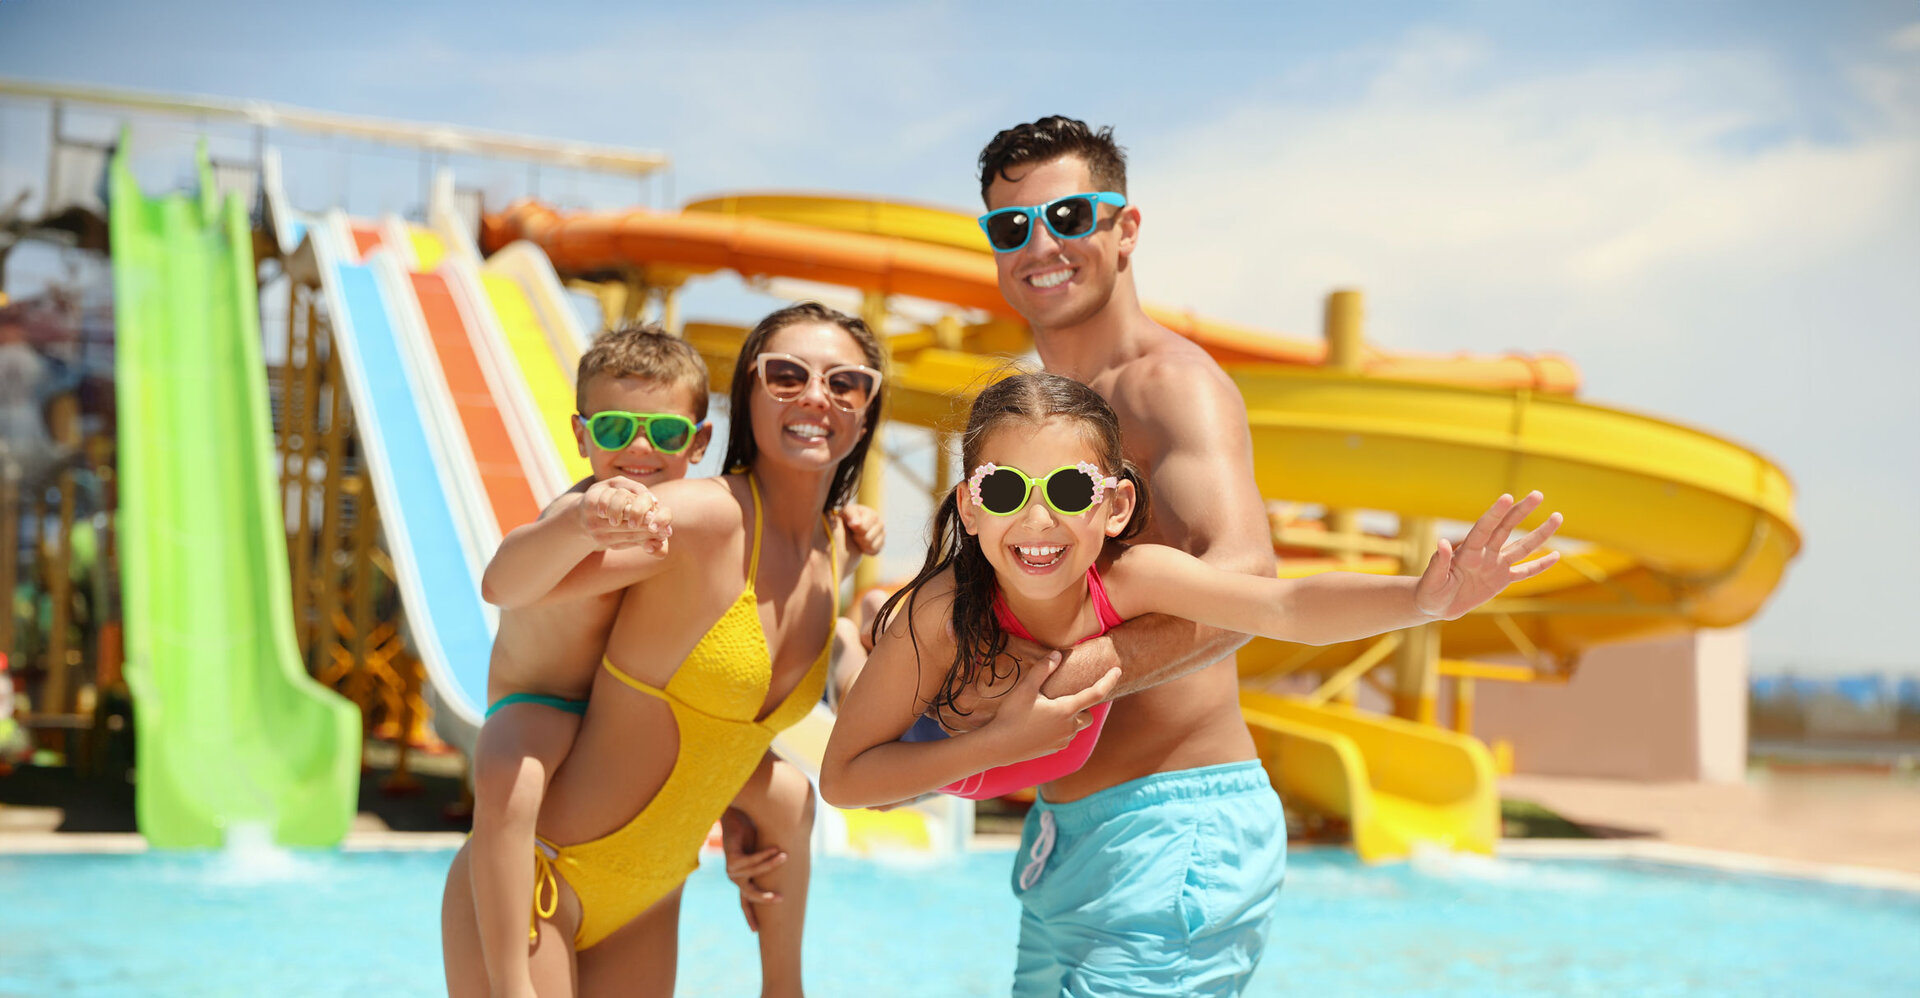 AVA Resort Cancun Activities